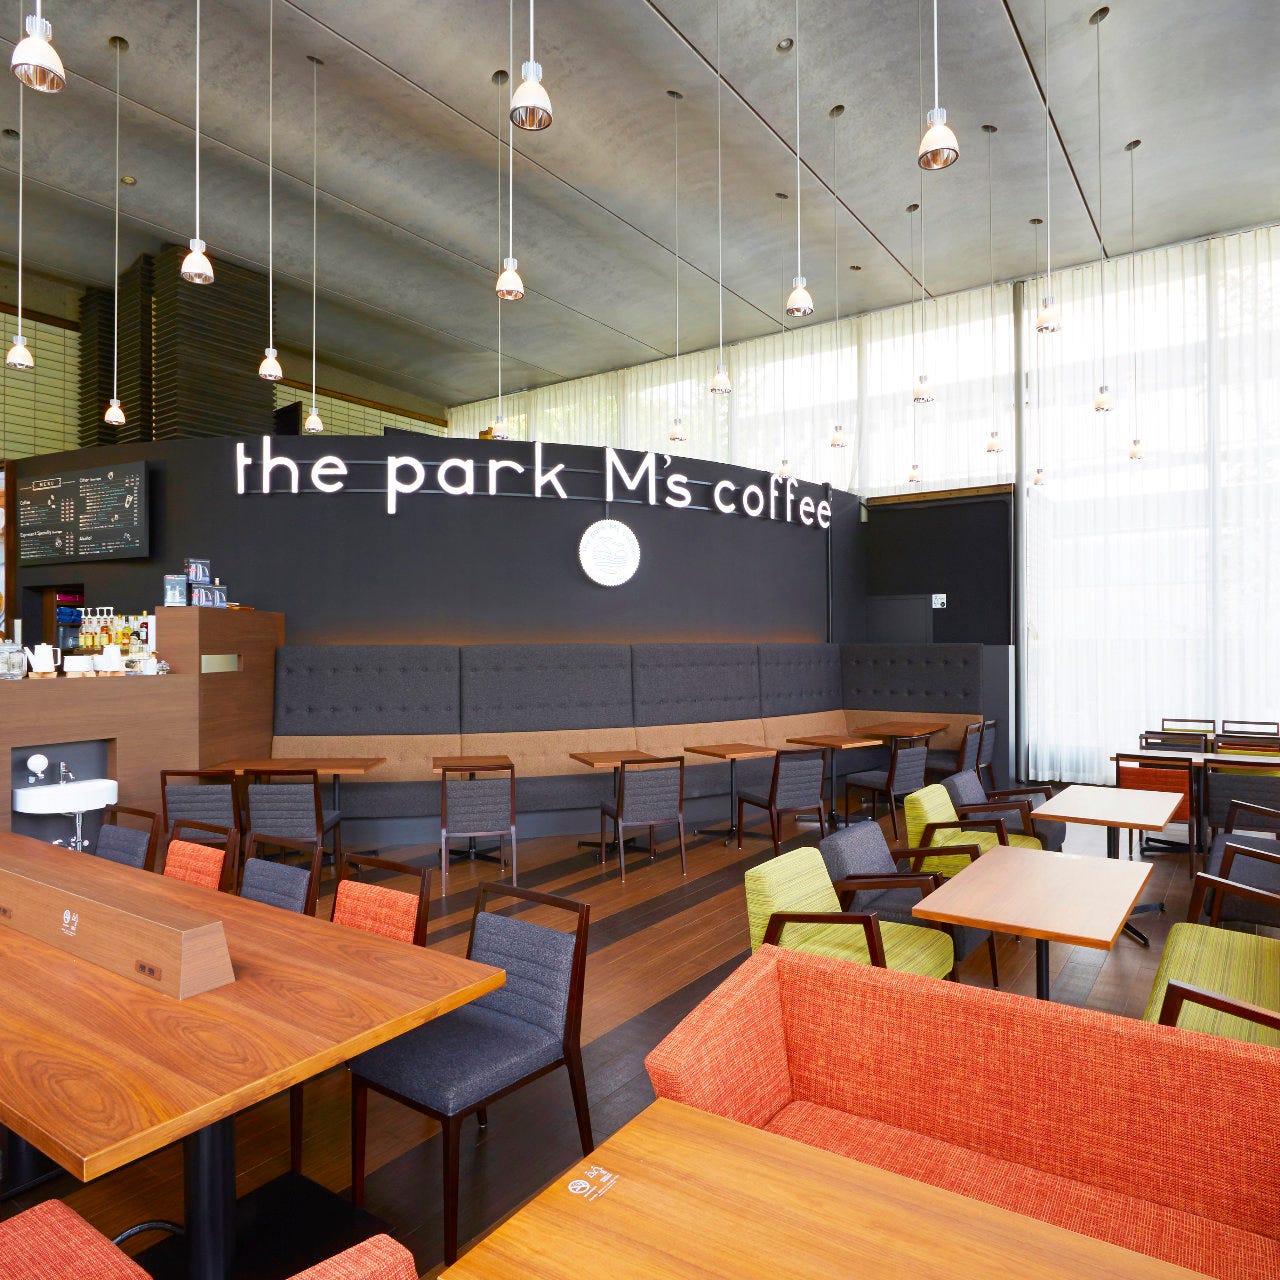 the park M’s coffeeの店内